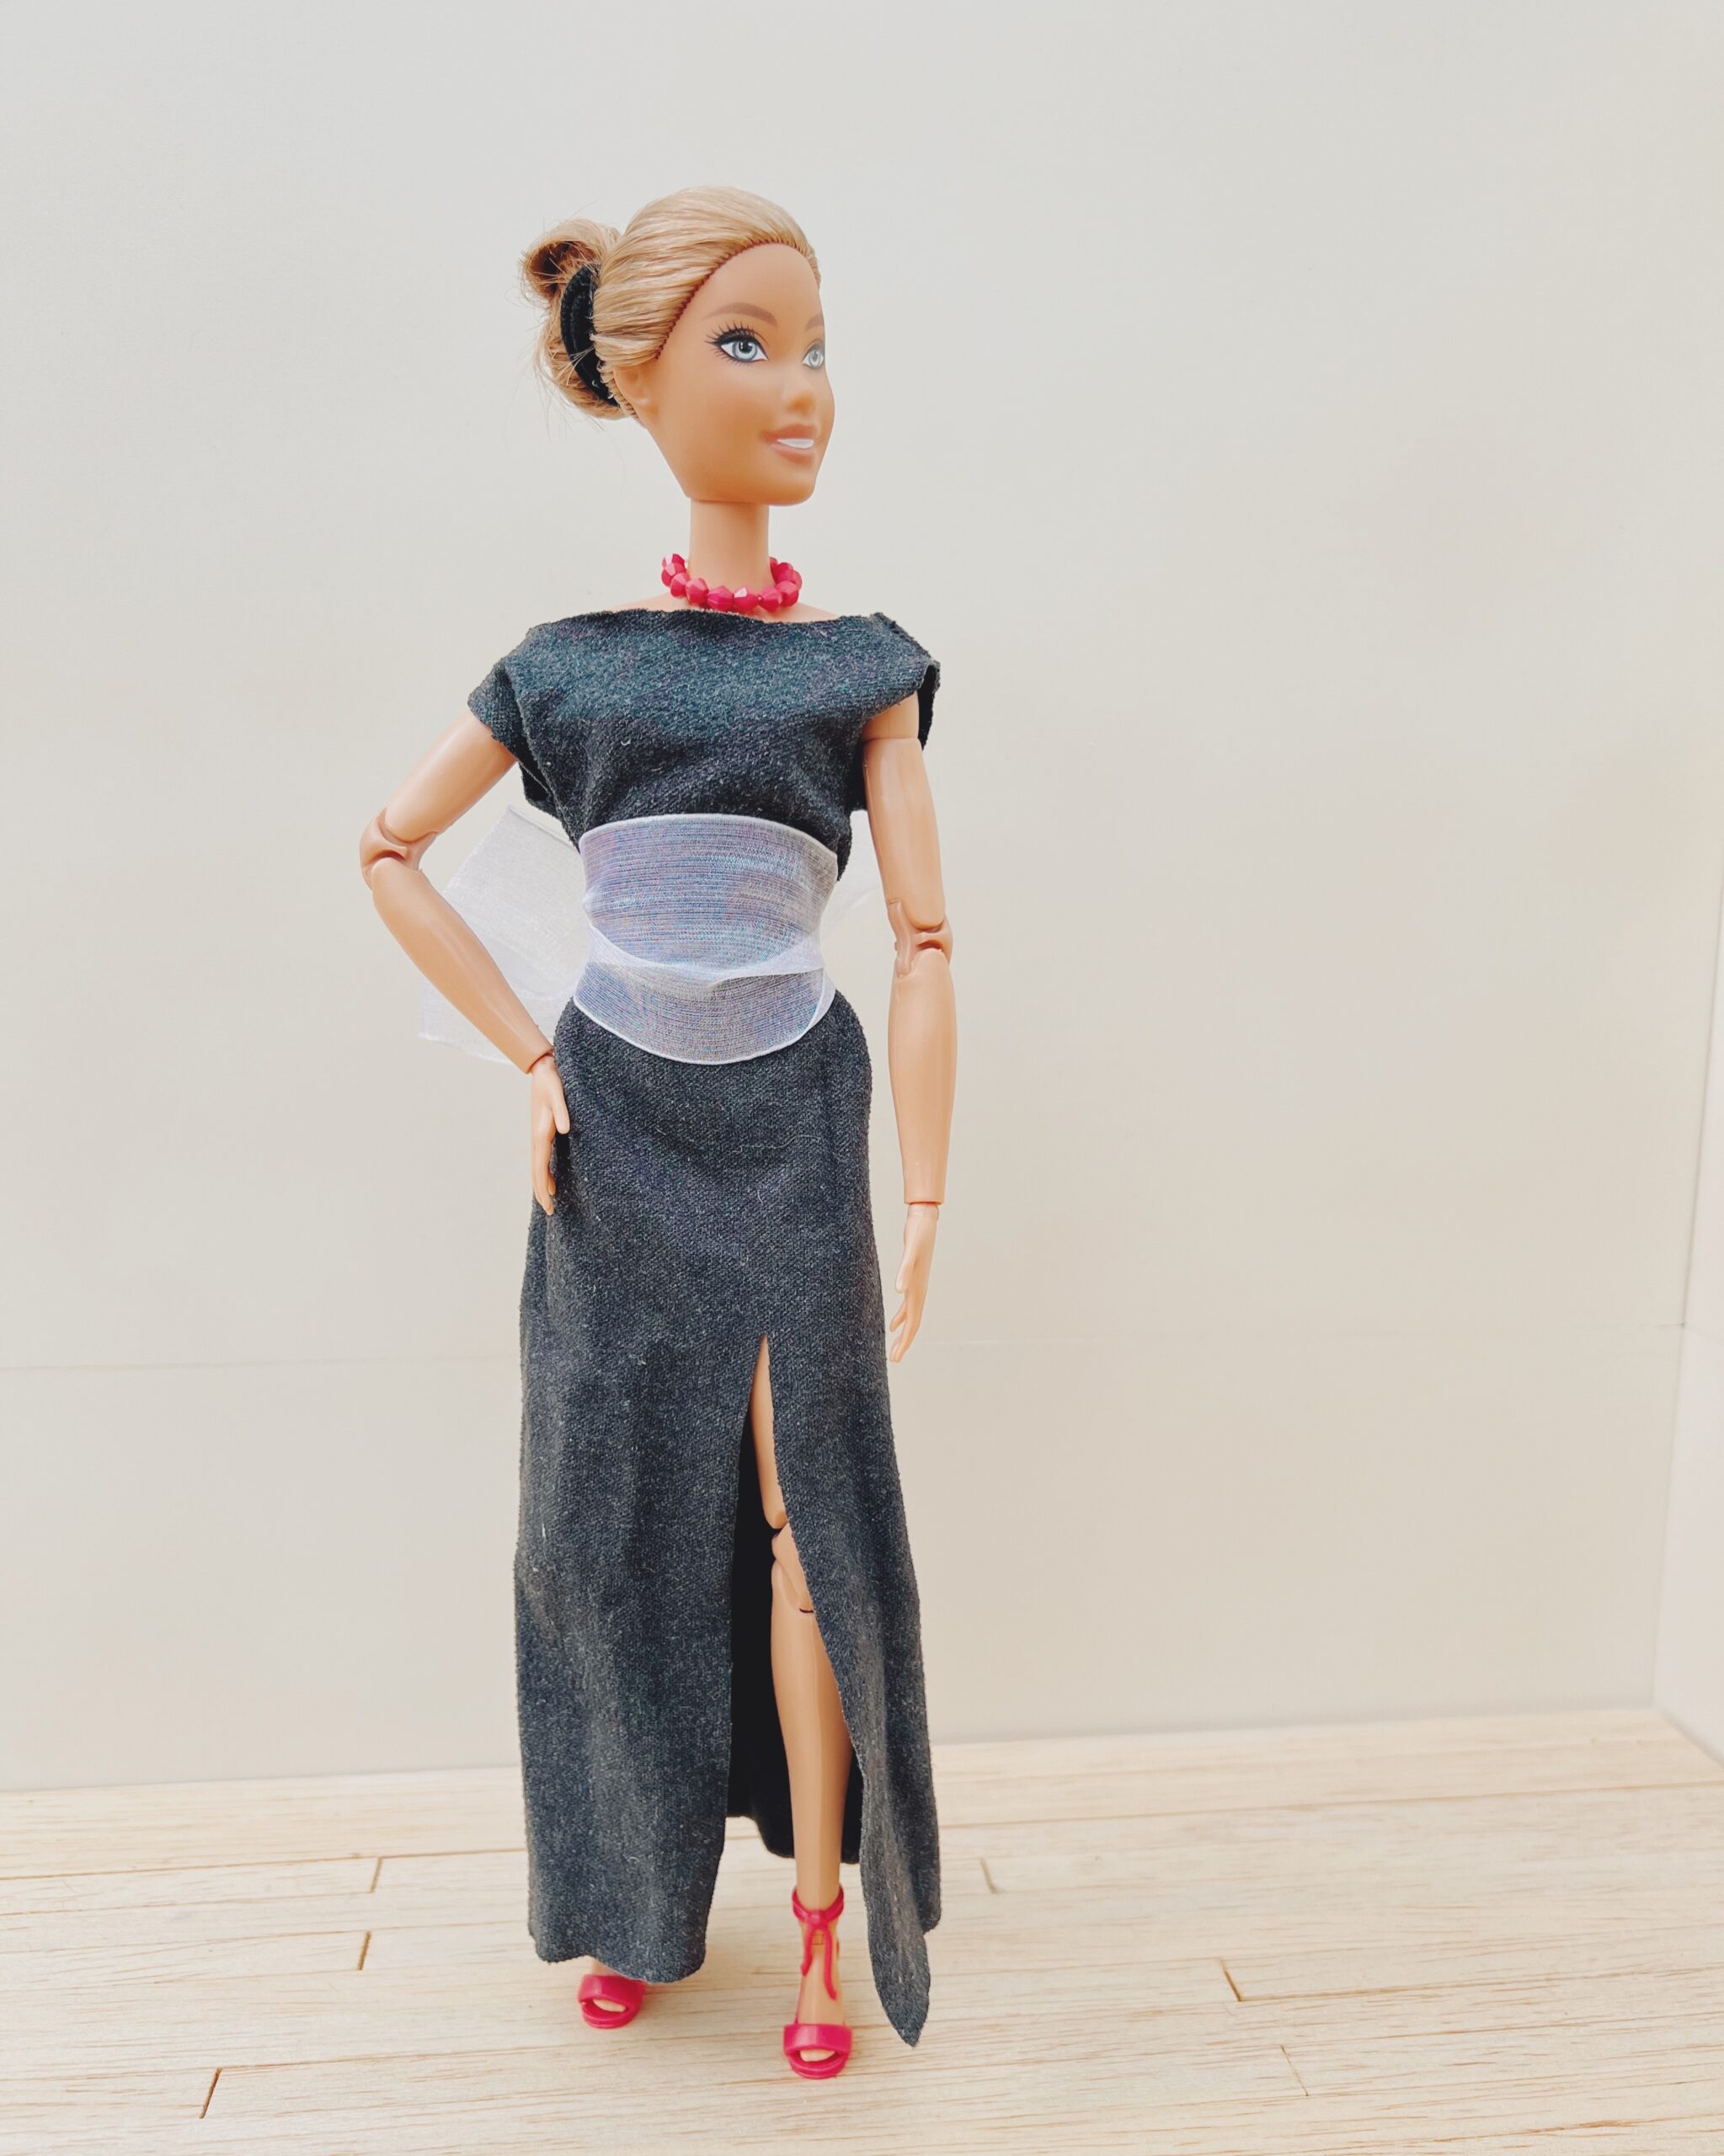 DIY BARBIE CLOTHES, How to Make Fashion Barbie Doll Clothes